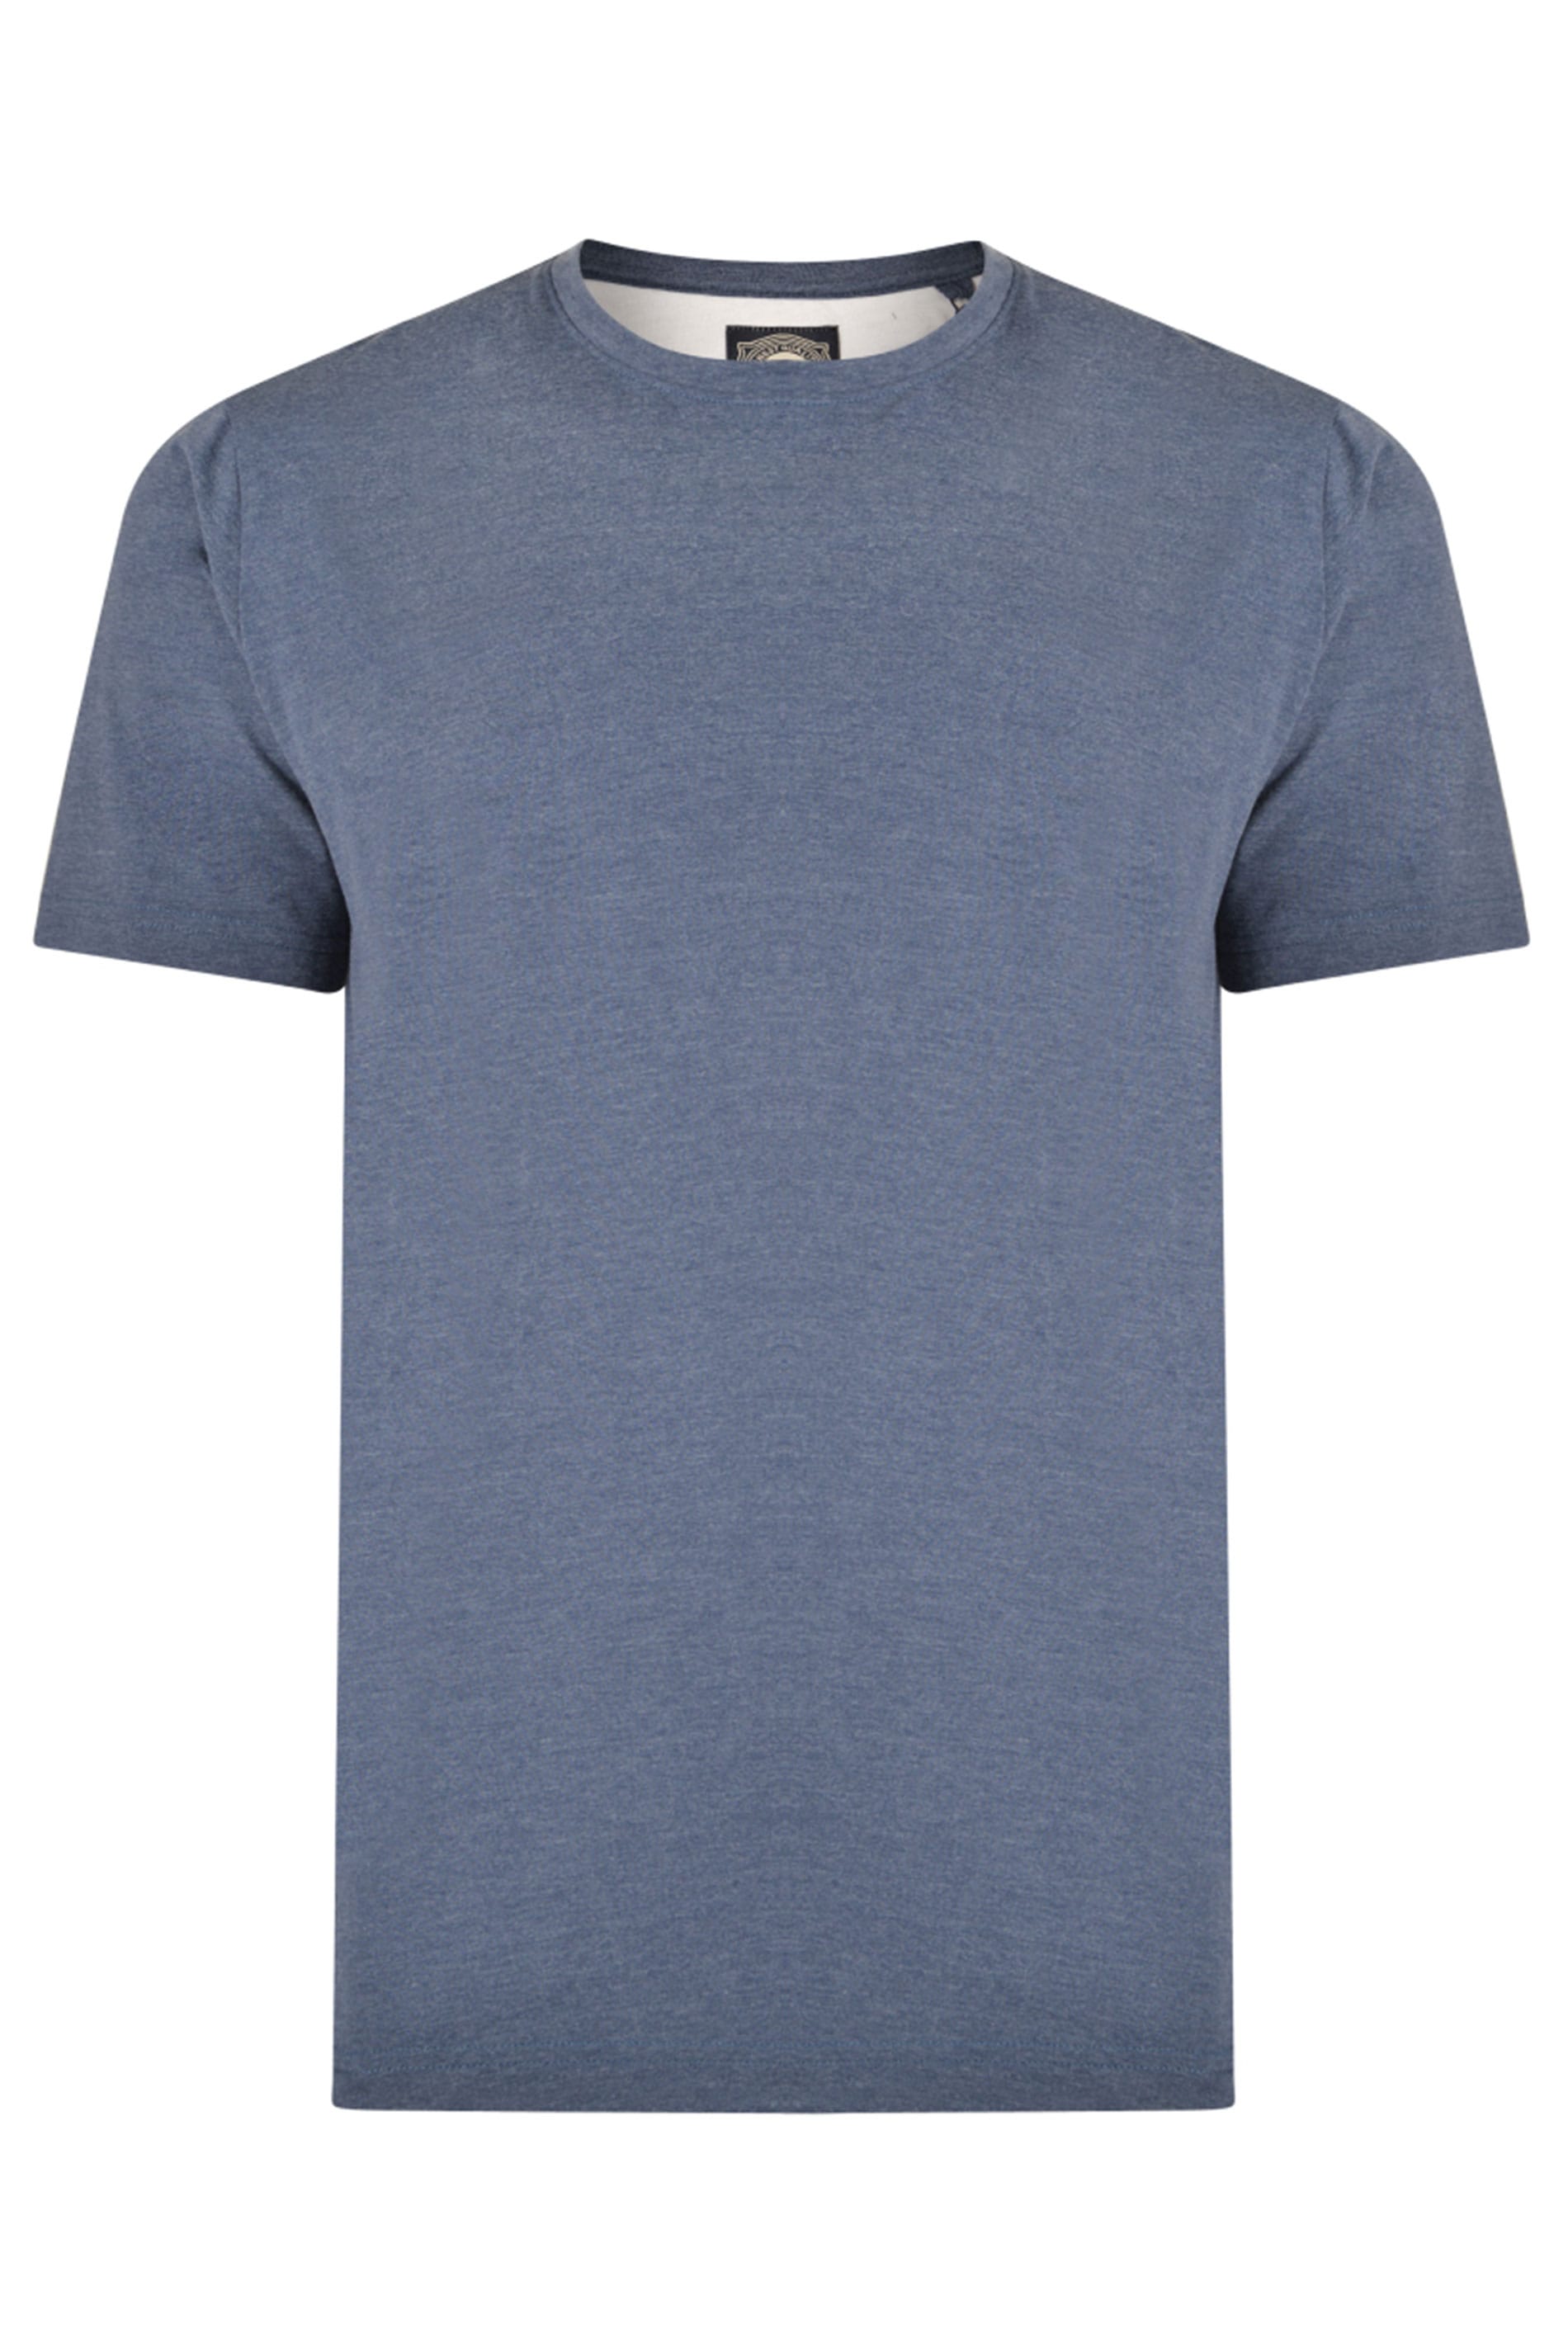 KAM Indigo Blue Plain T-Shirt | BadRhino 2